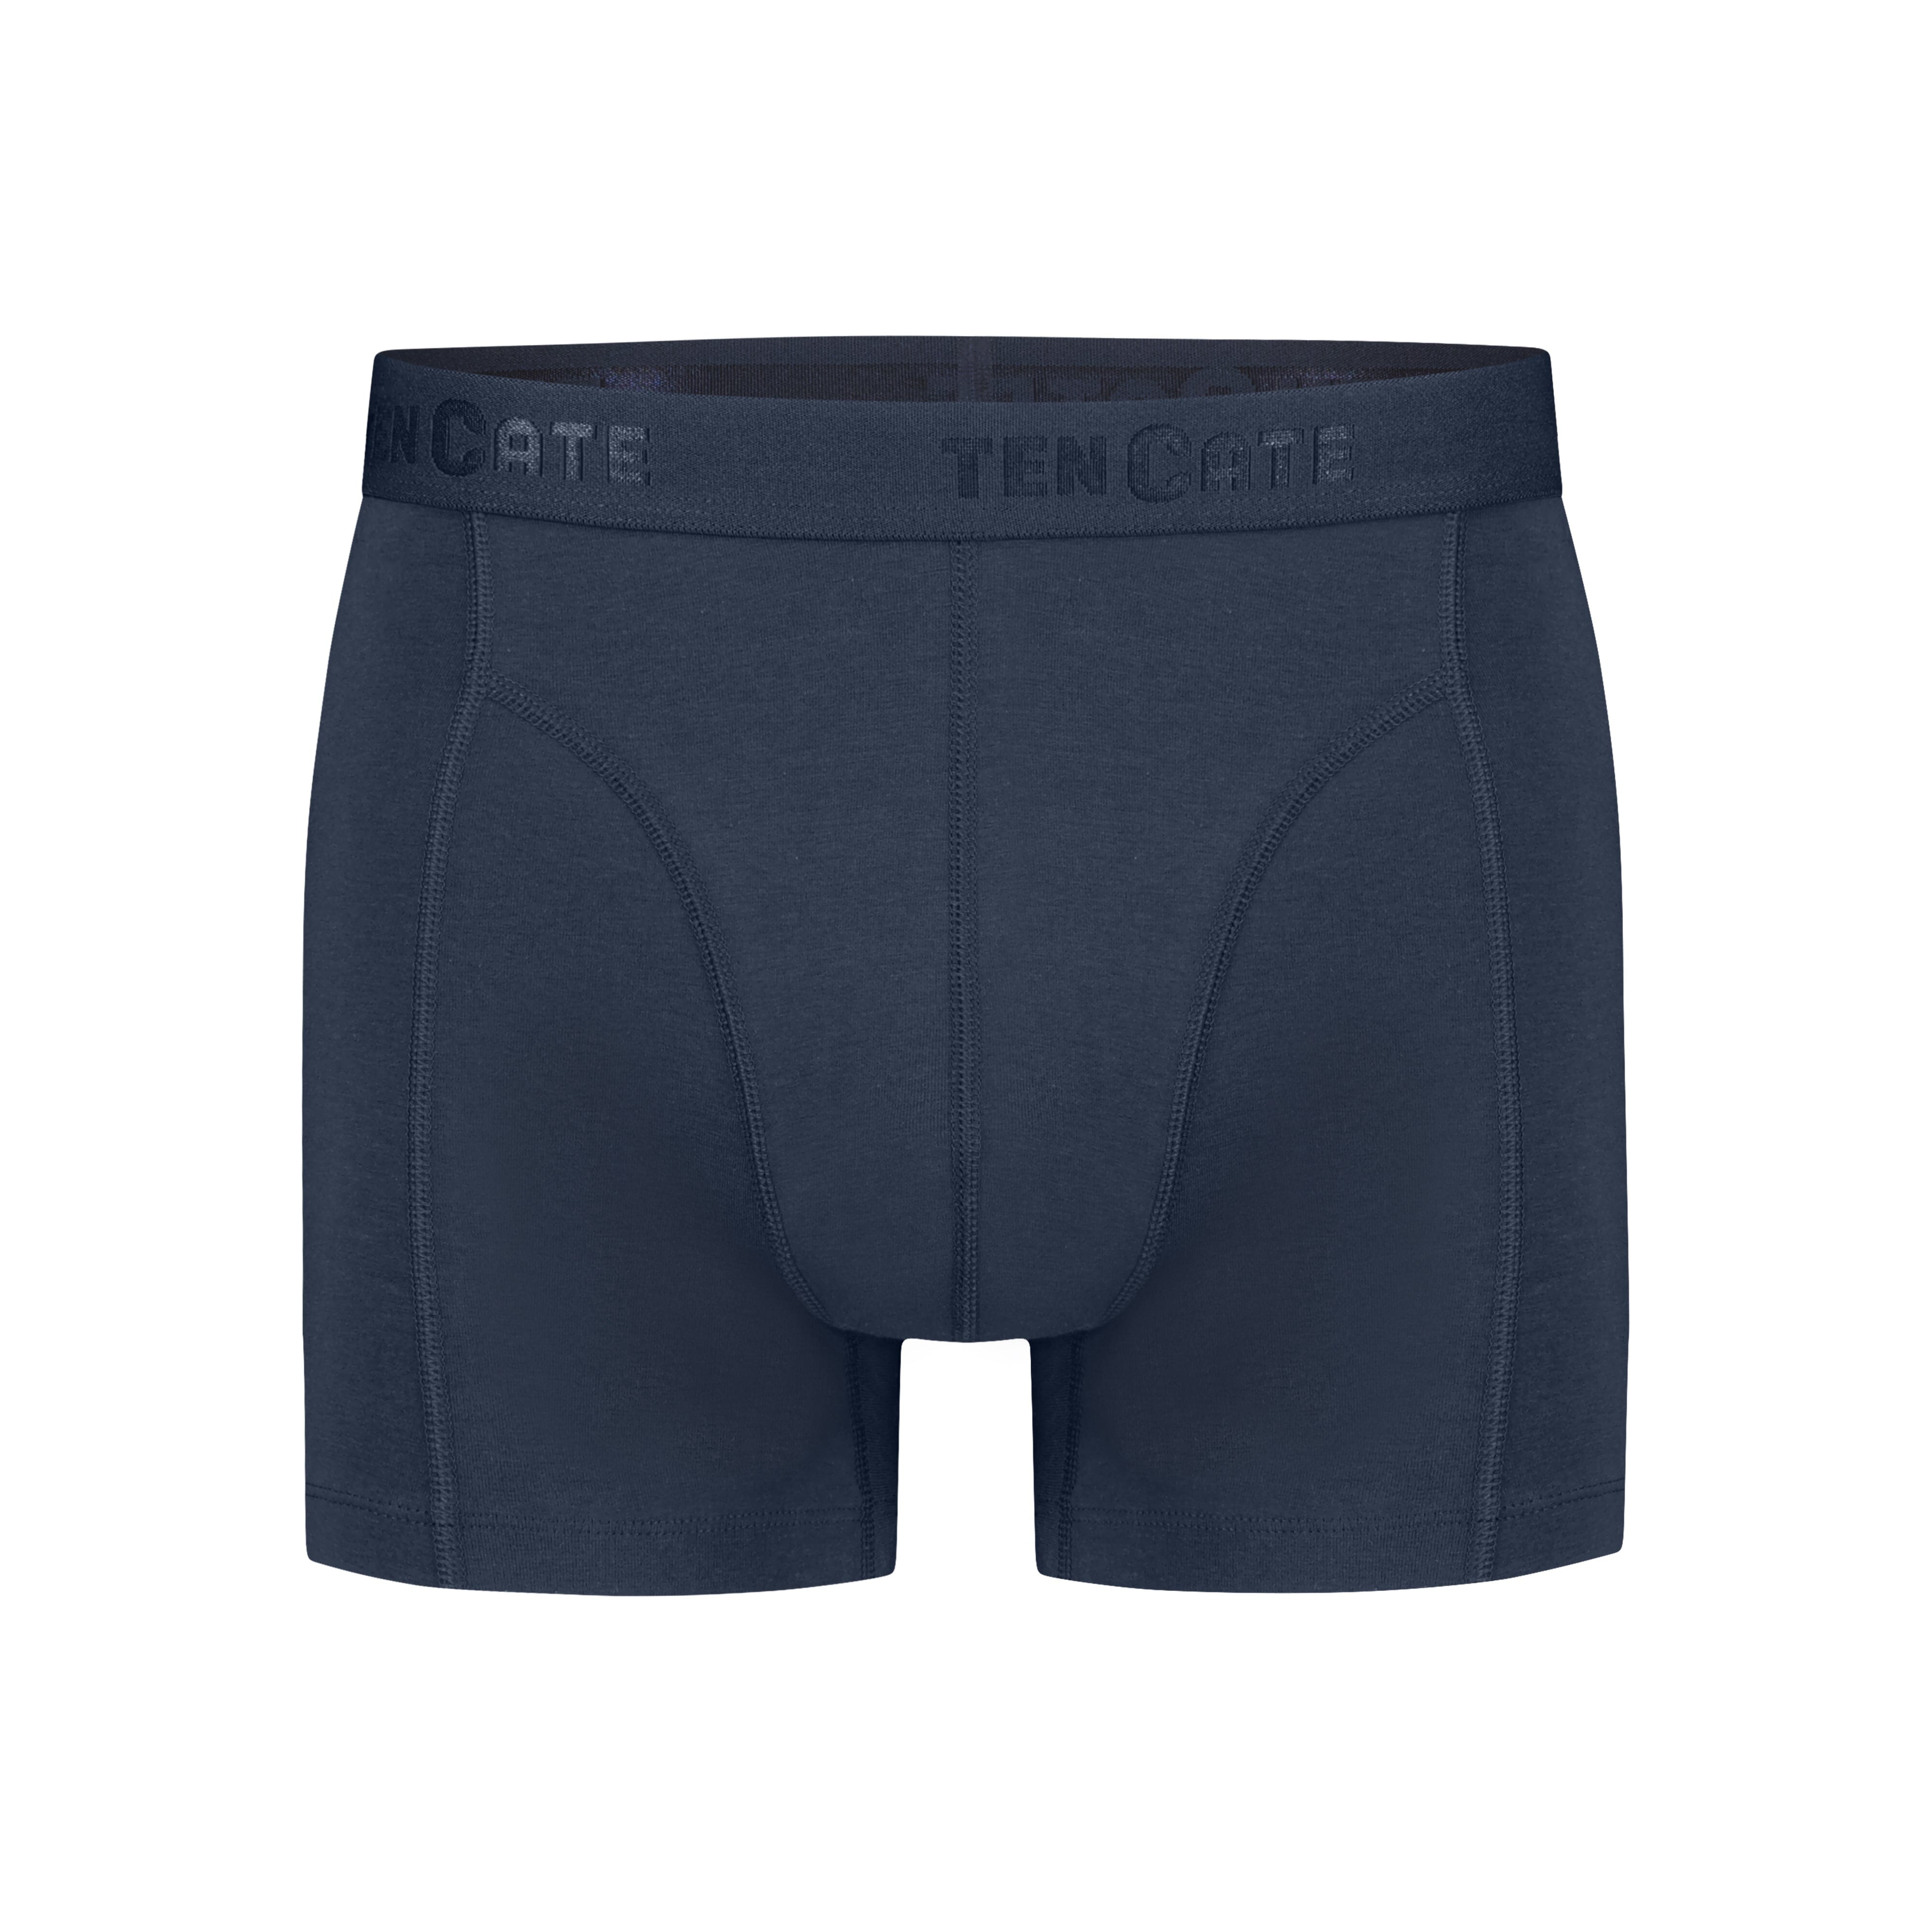 Ten Cate - 32323 - Basic Men Shorts 2-pack - Navy Short Ten Cate 